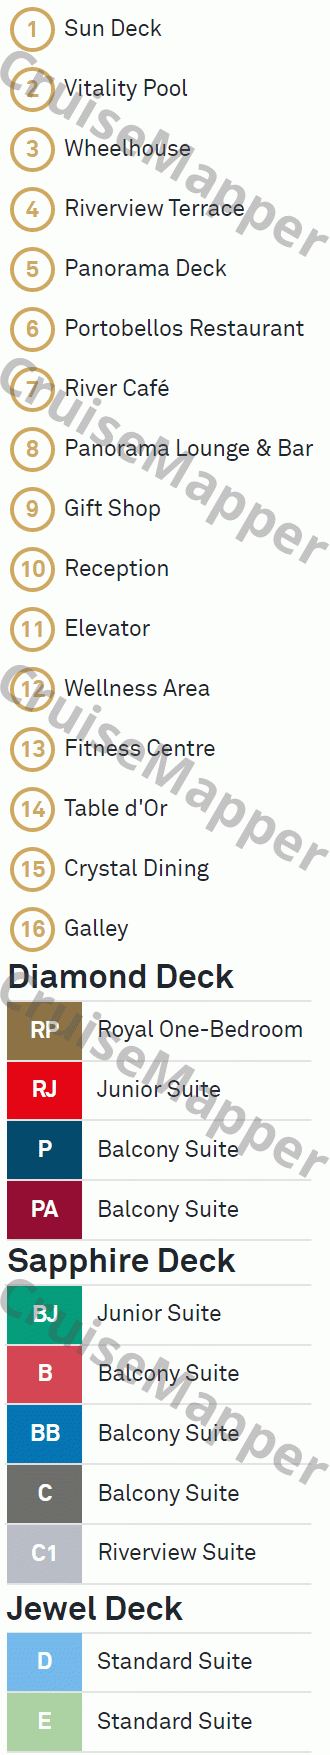 Scenic Azure deck 2 plan (Sapphire-Dining-Spa) legend